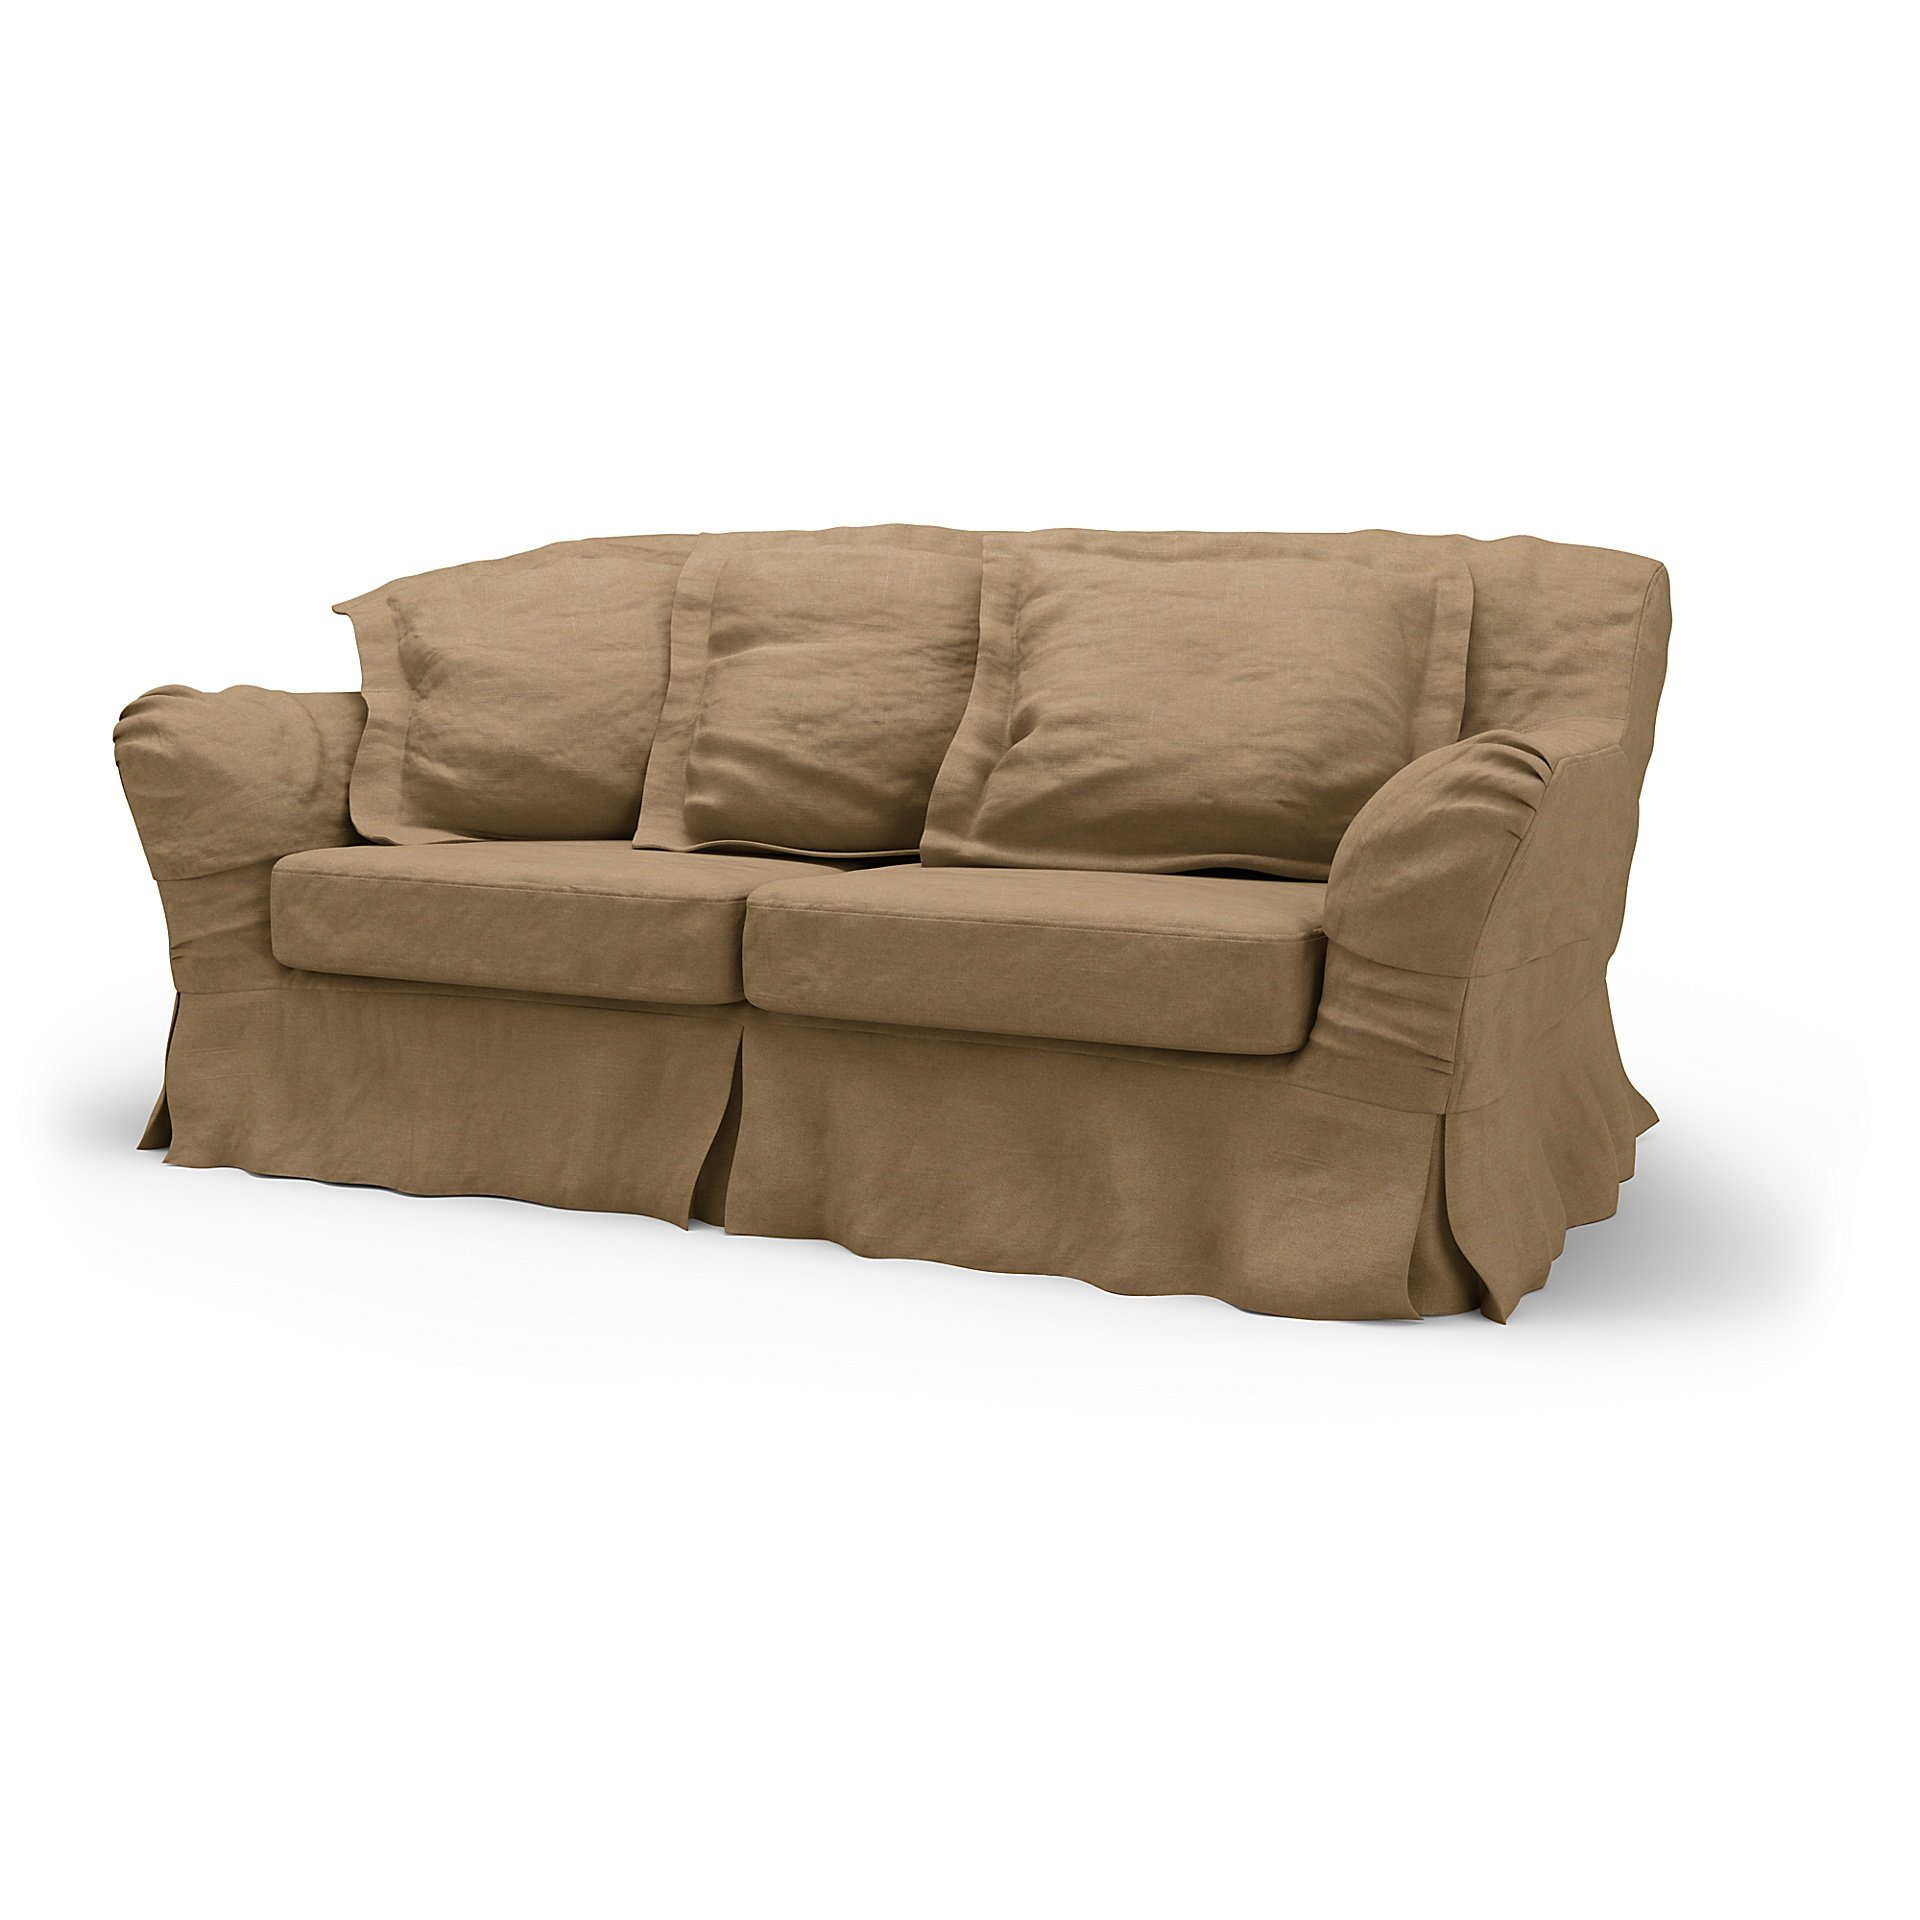 IKEA - Tomelilla 2 Seater Sofa Cover, Sand, Wool - Bemz